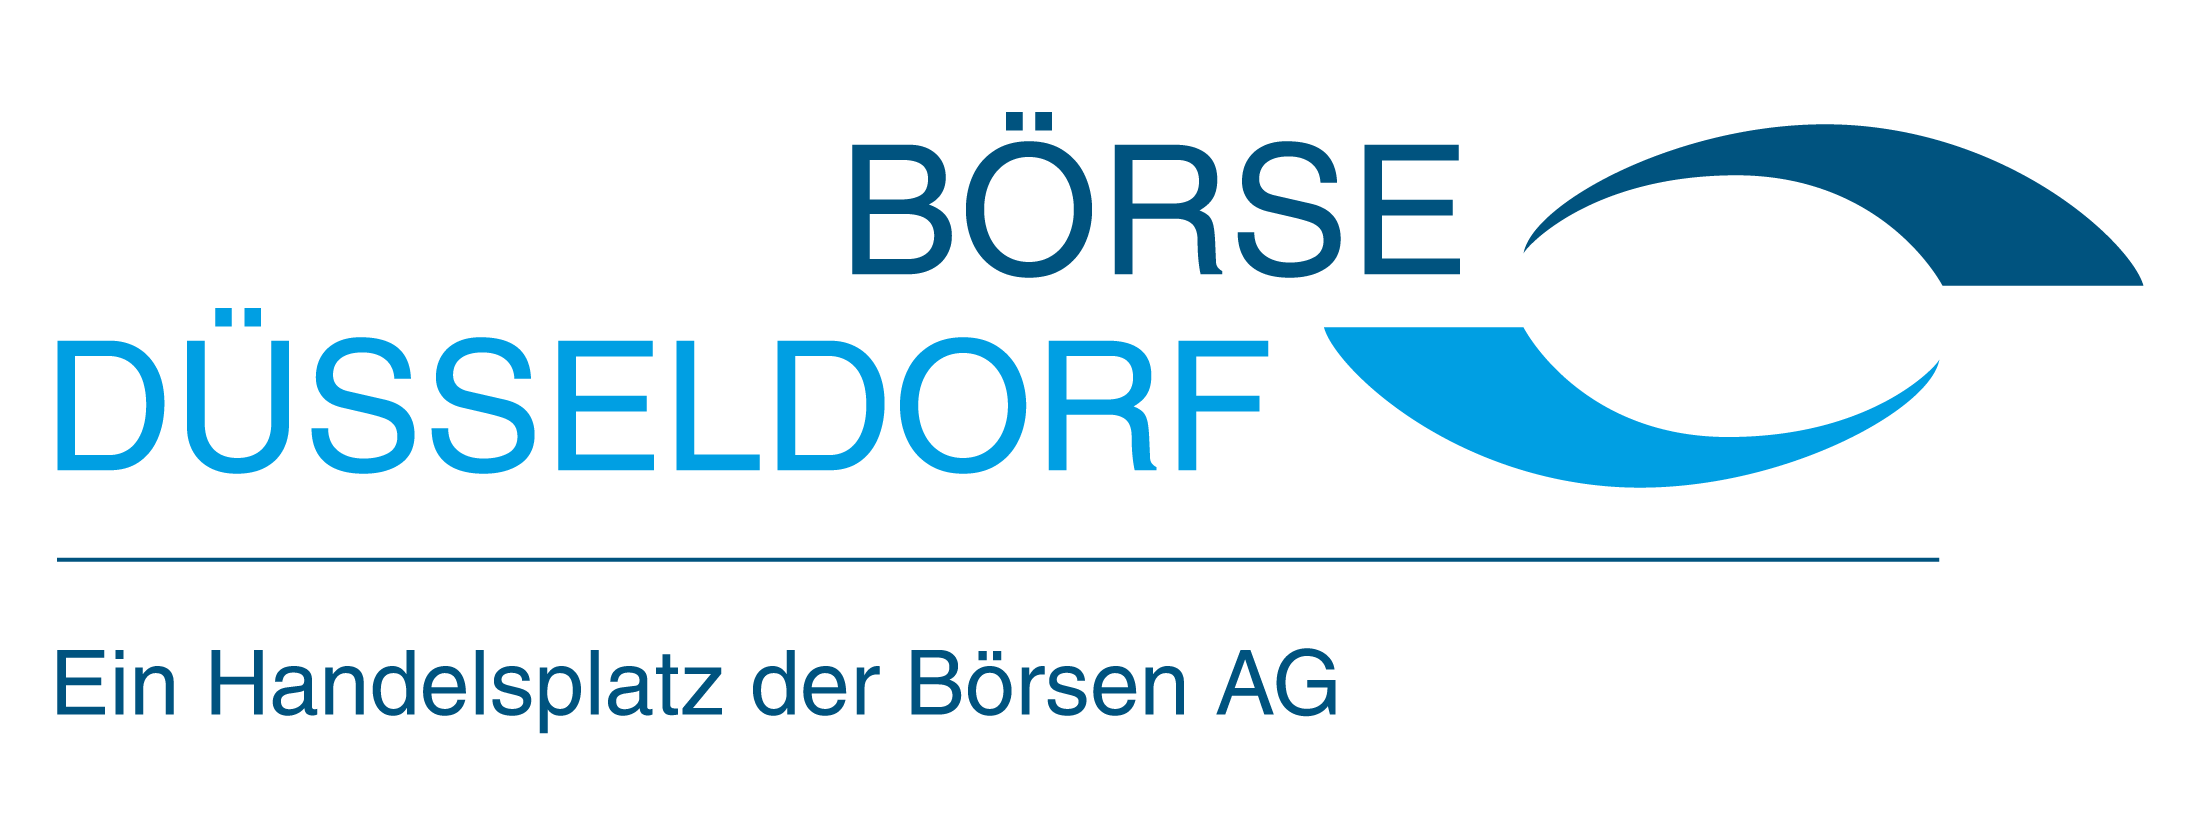 Logo der Börse Düsseldorf